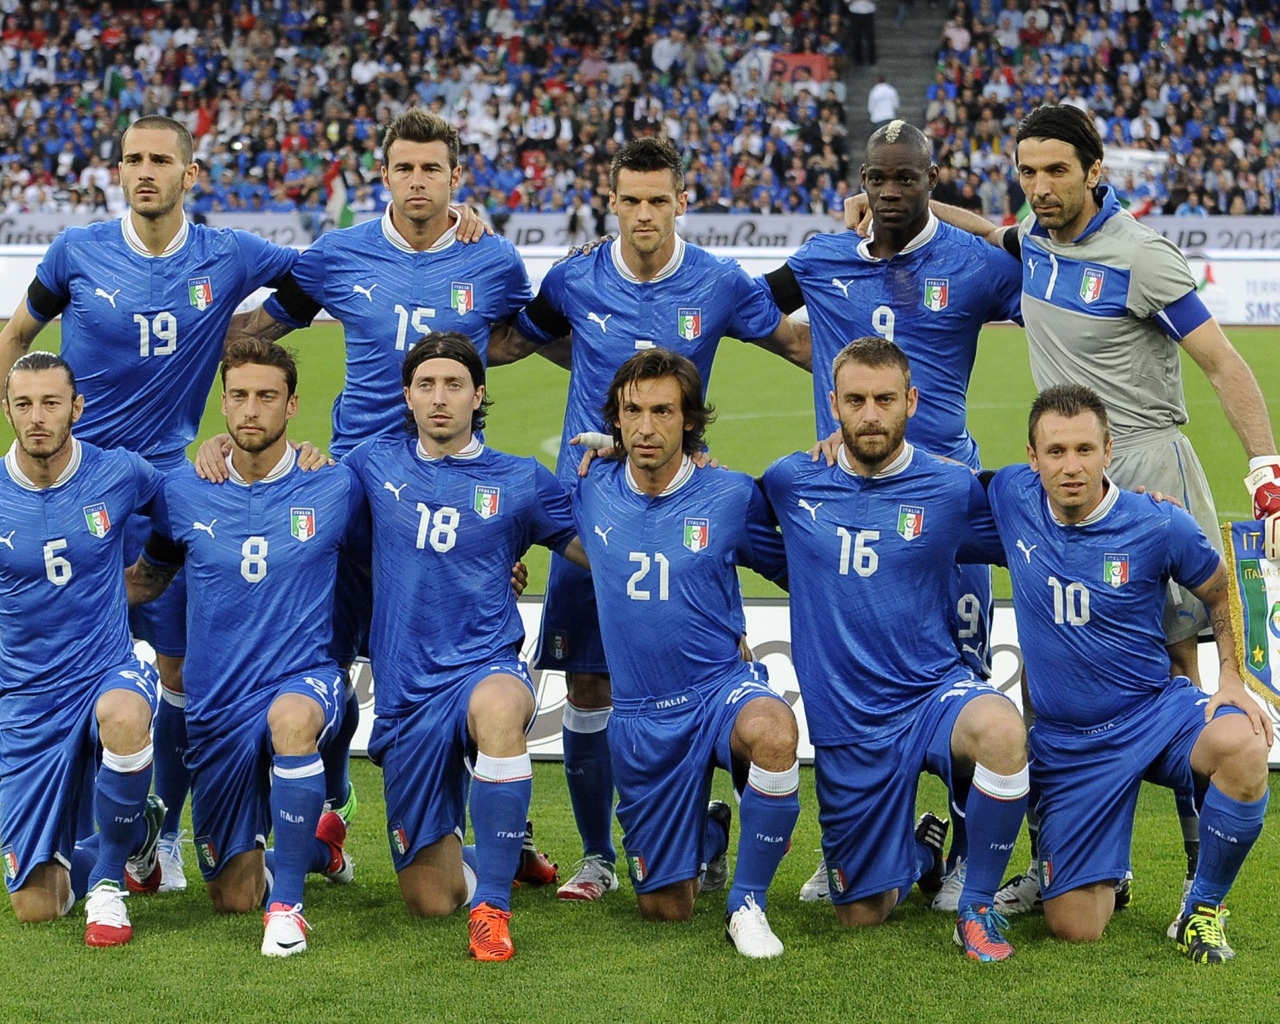 Italia National Team for 1280 x 1024 resolution